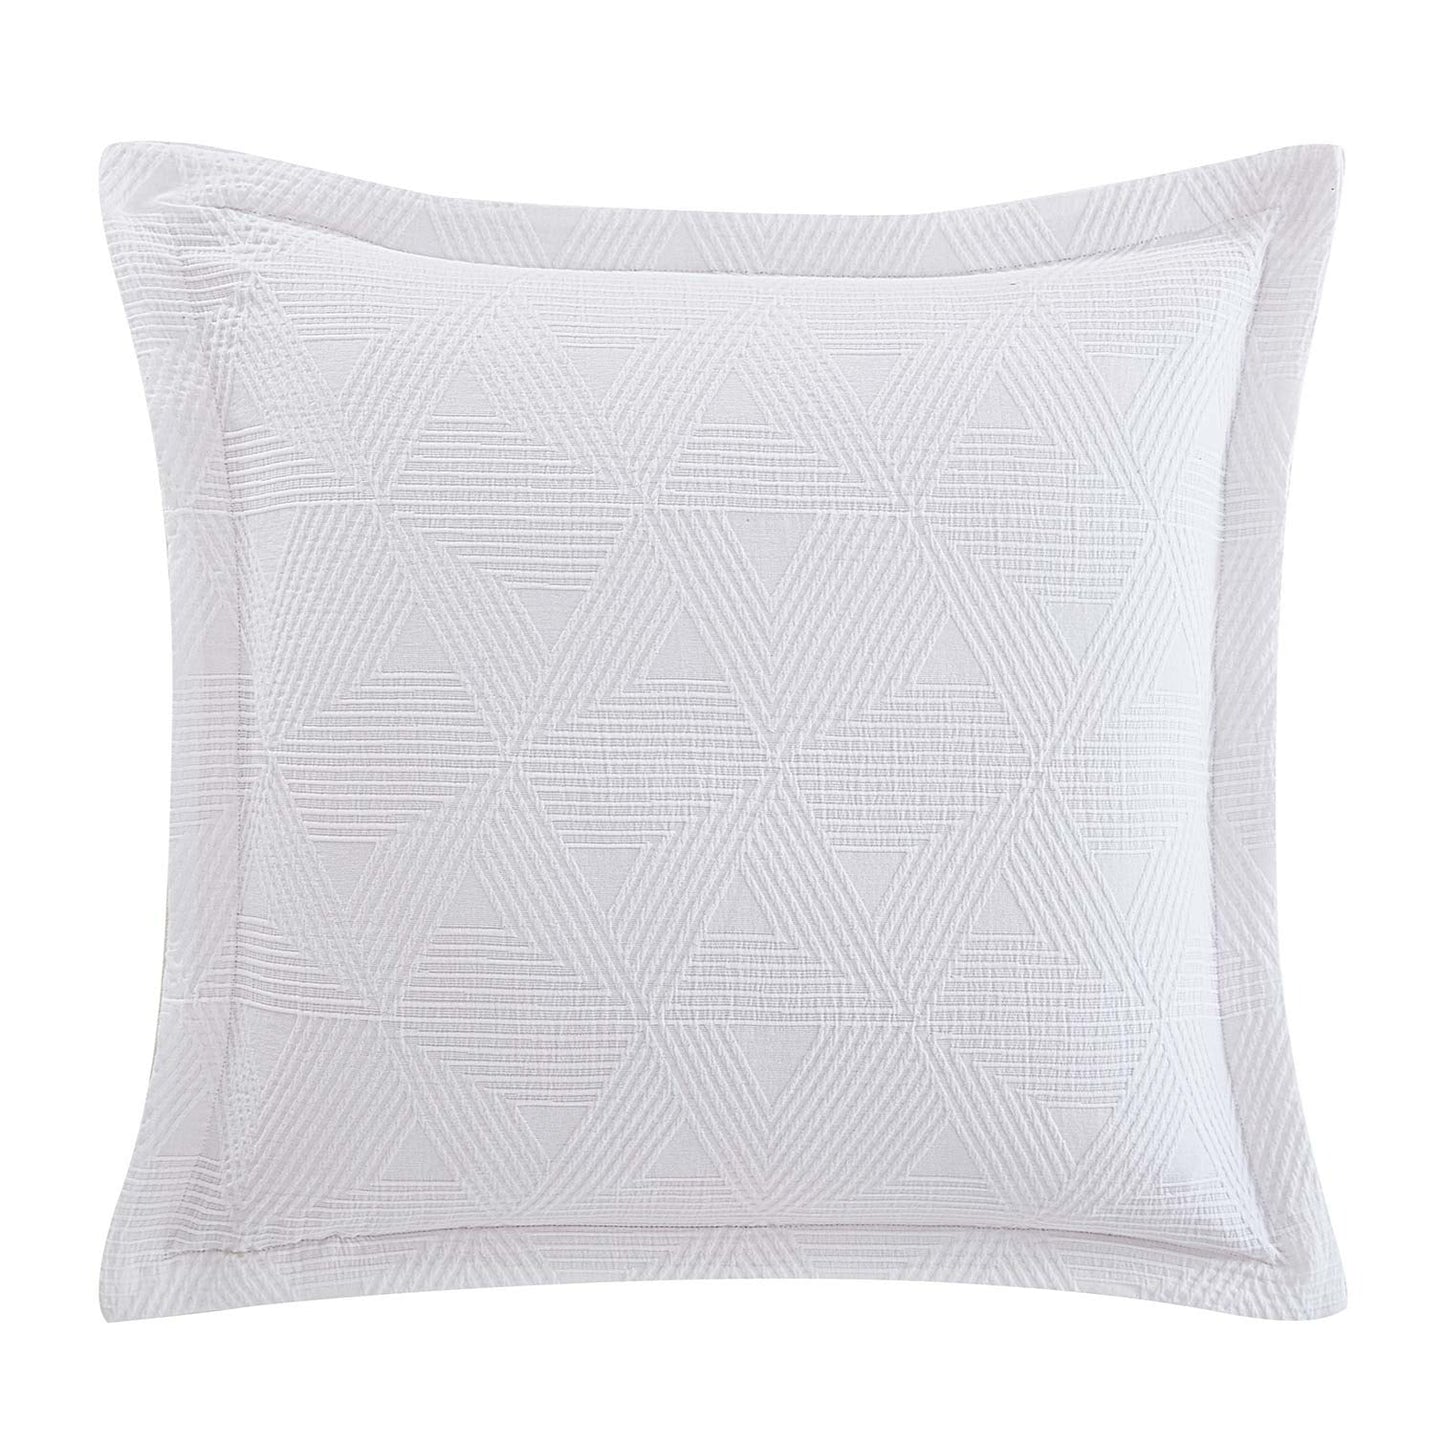 Braddon White European Pillowcase by Private Collection